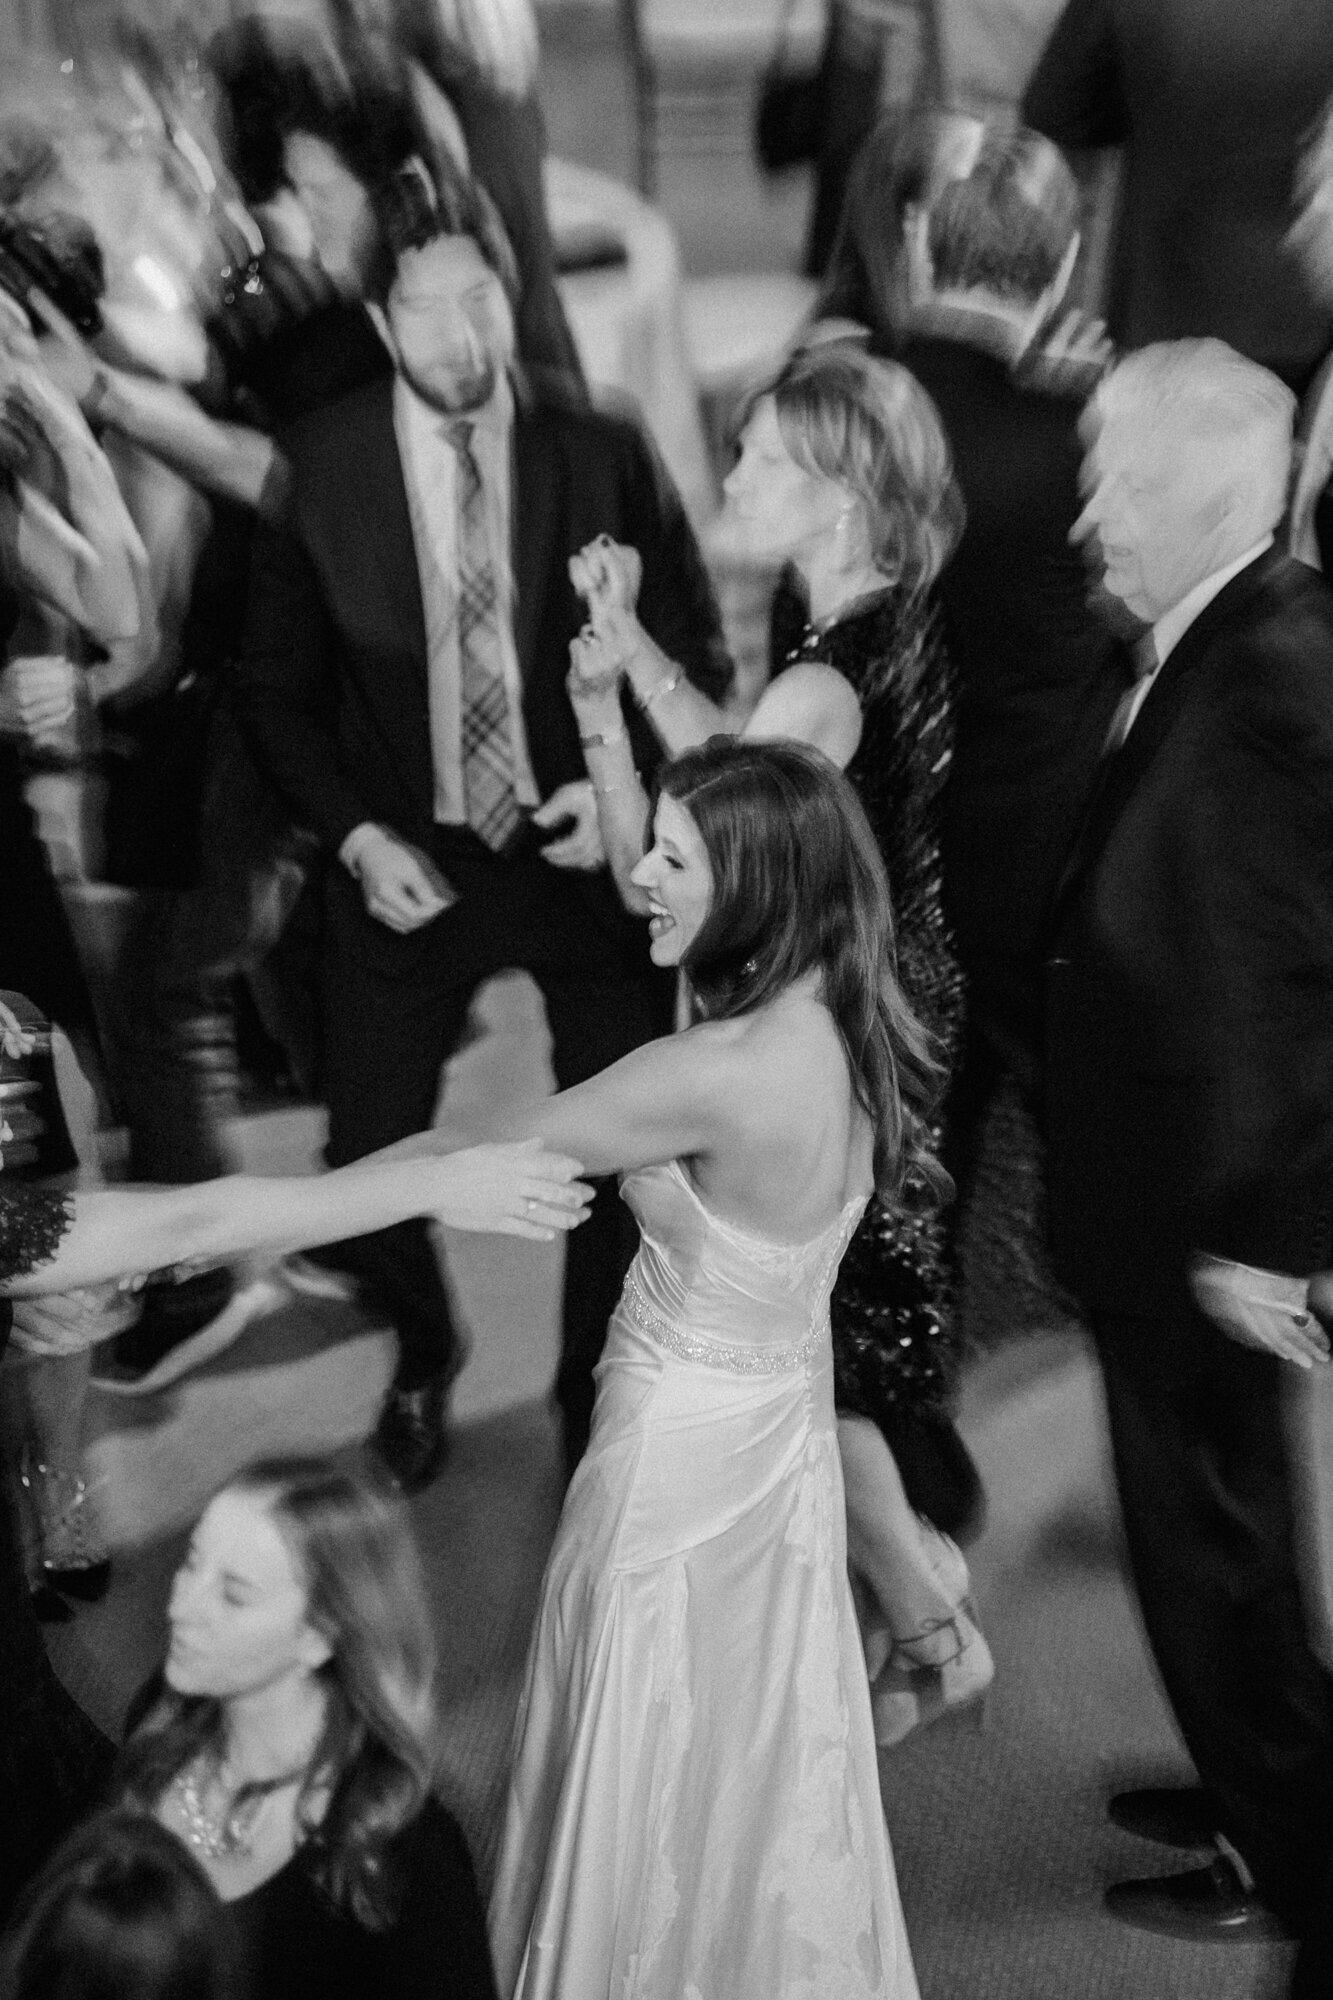 A motion filled wedding dance floor candid